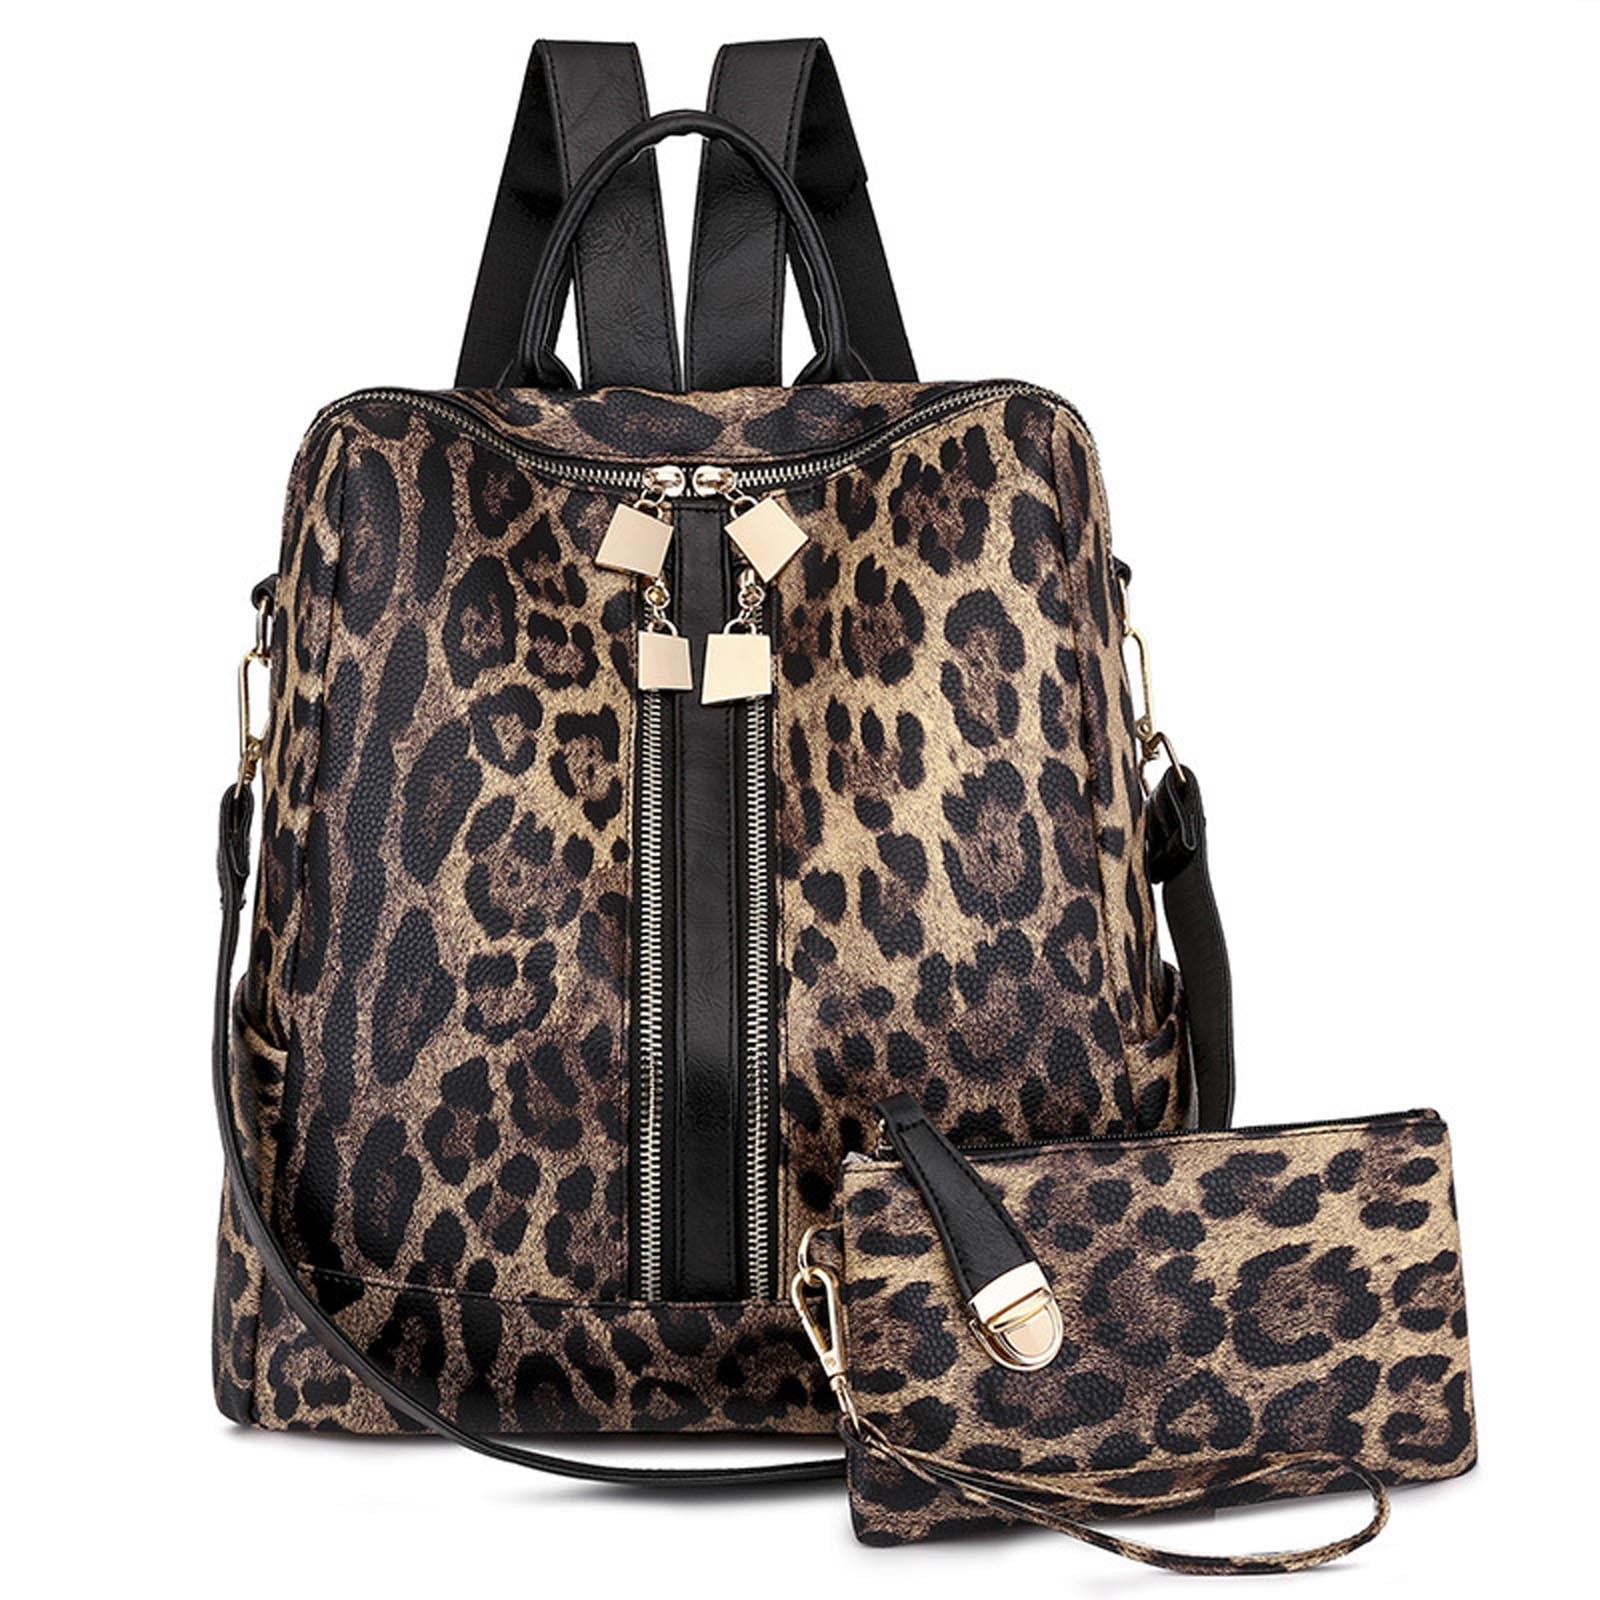 Holiday Saving! Dvkptbk Gift Bag Backpack Purse For Women Leather ...